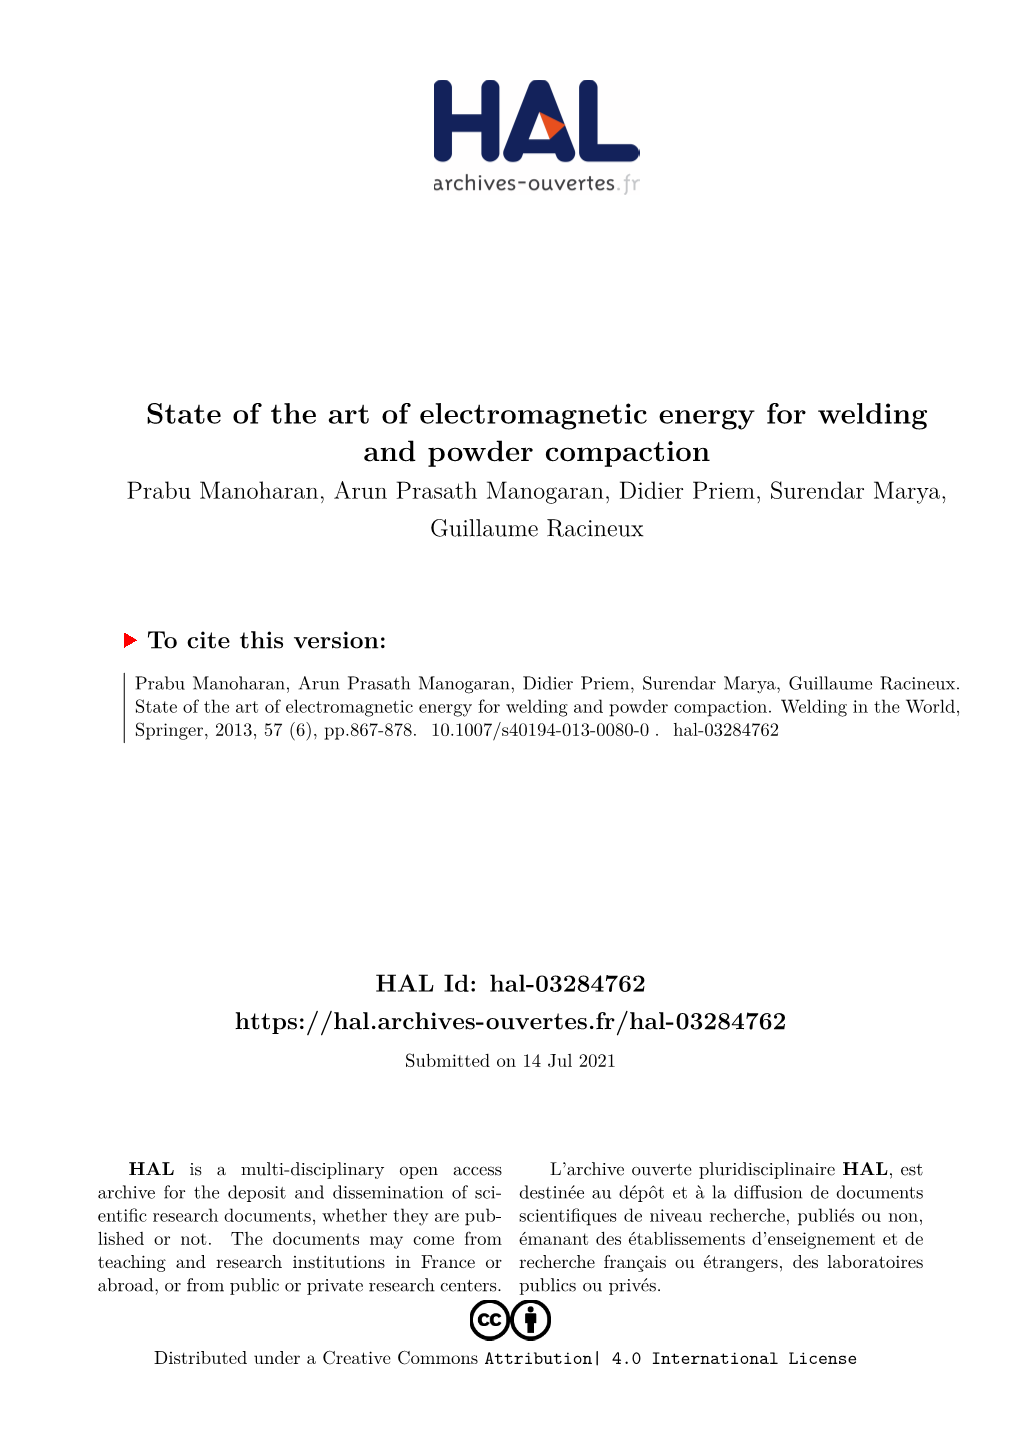 State of the Art of Electromagnetic Energy for Welding and Powder Compaction Prabu Manoharan, Arun Prasath Manogaran, Didier Priem, Surendar Marya, Guillaume Racineux